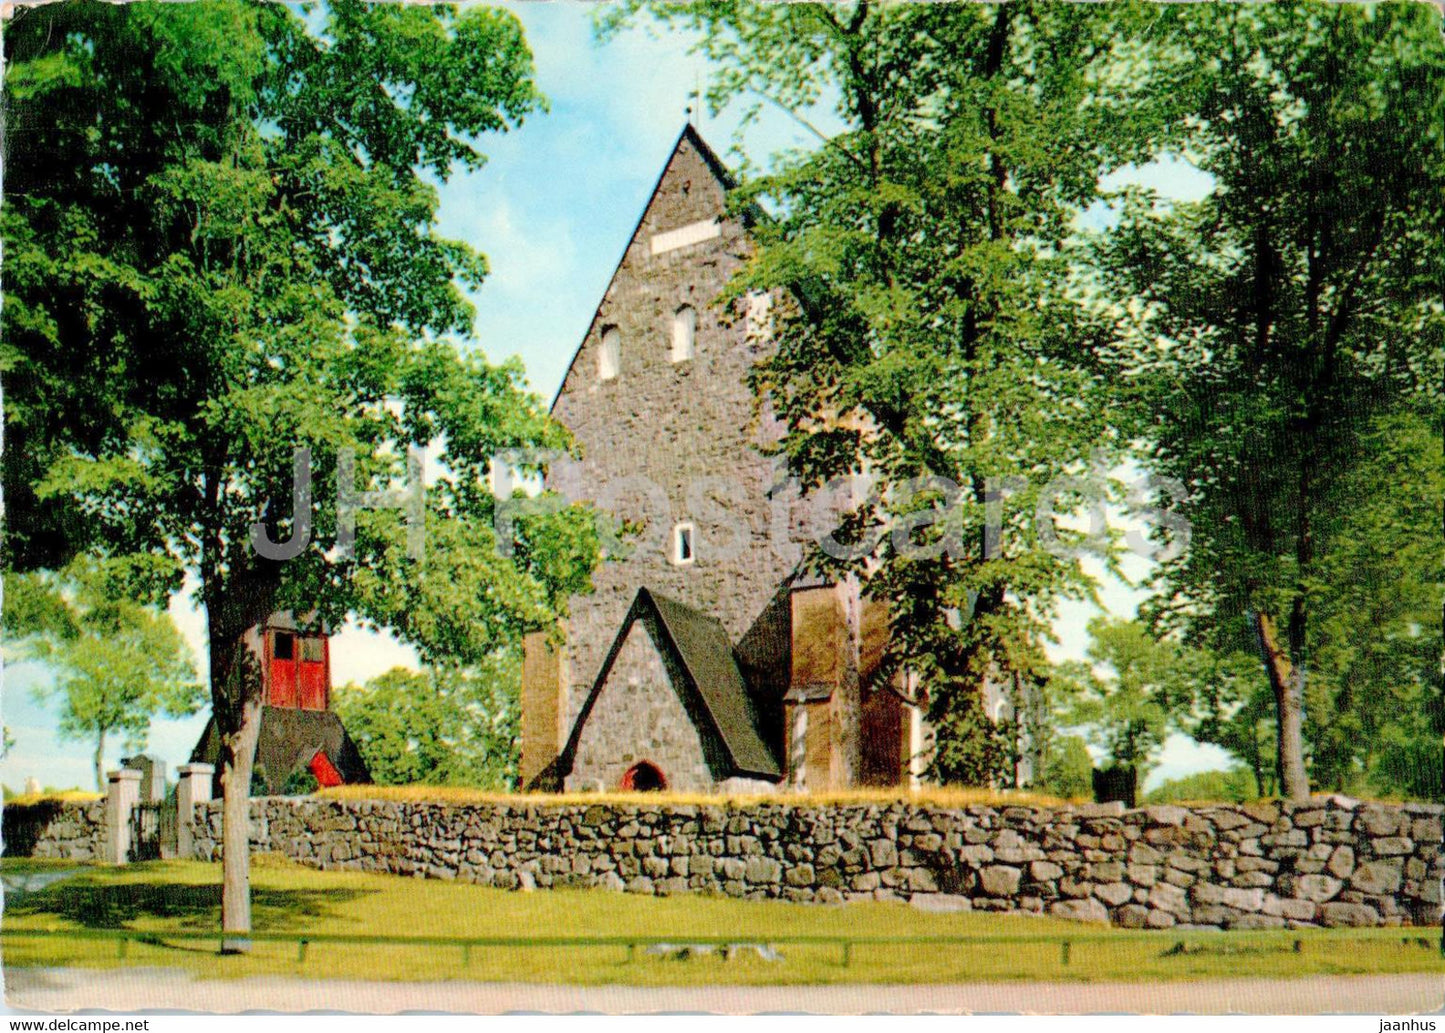 Gamla Uppsala kyrka - church - 792 - 1961 - Sweden - used - JH Postcards